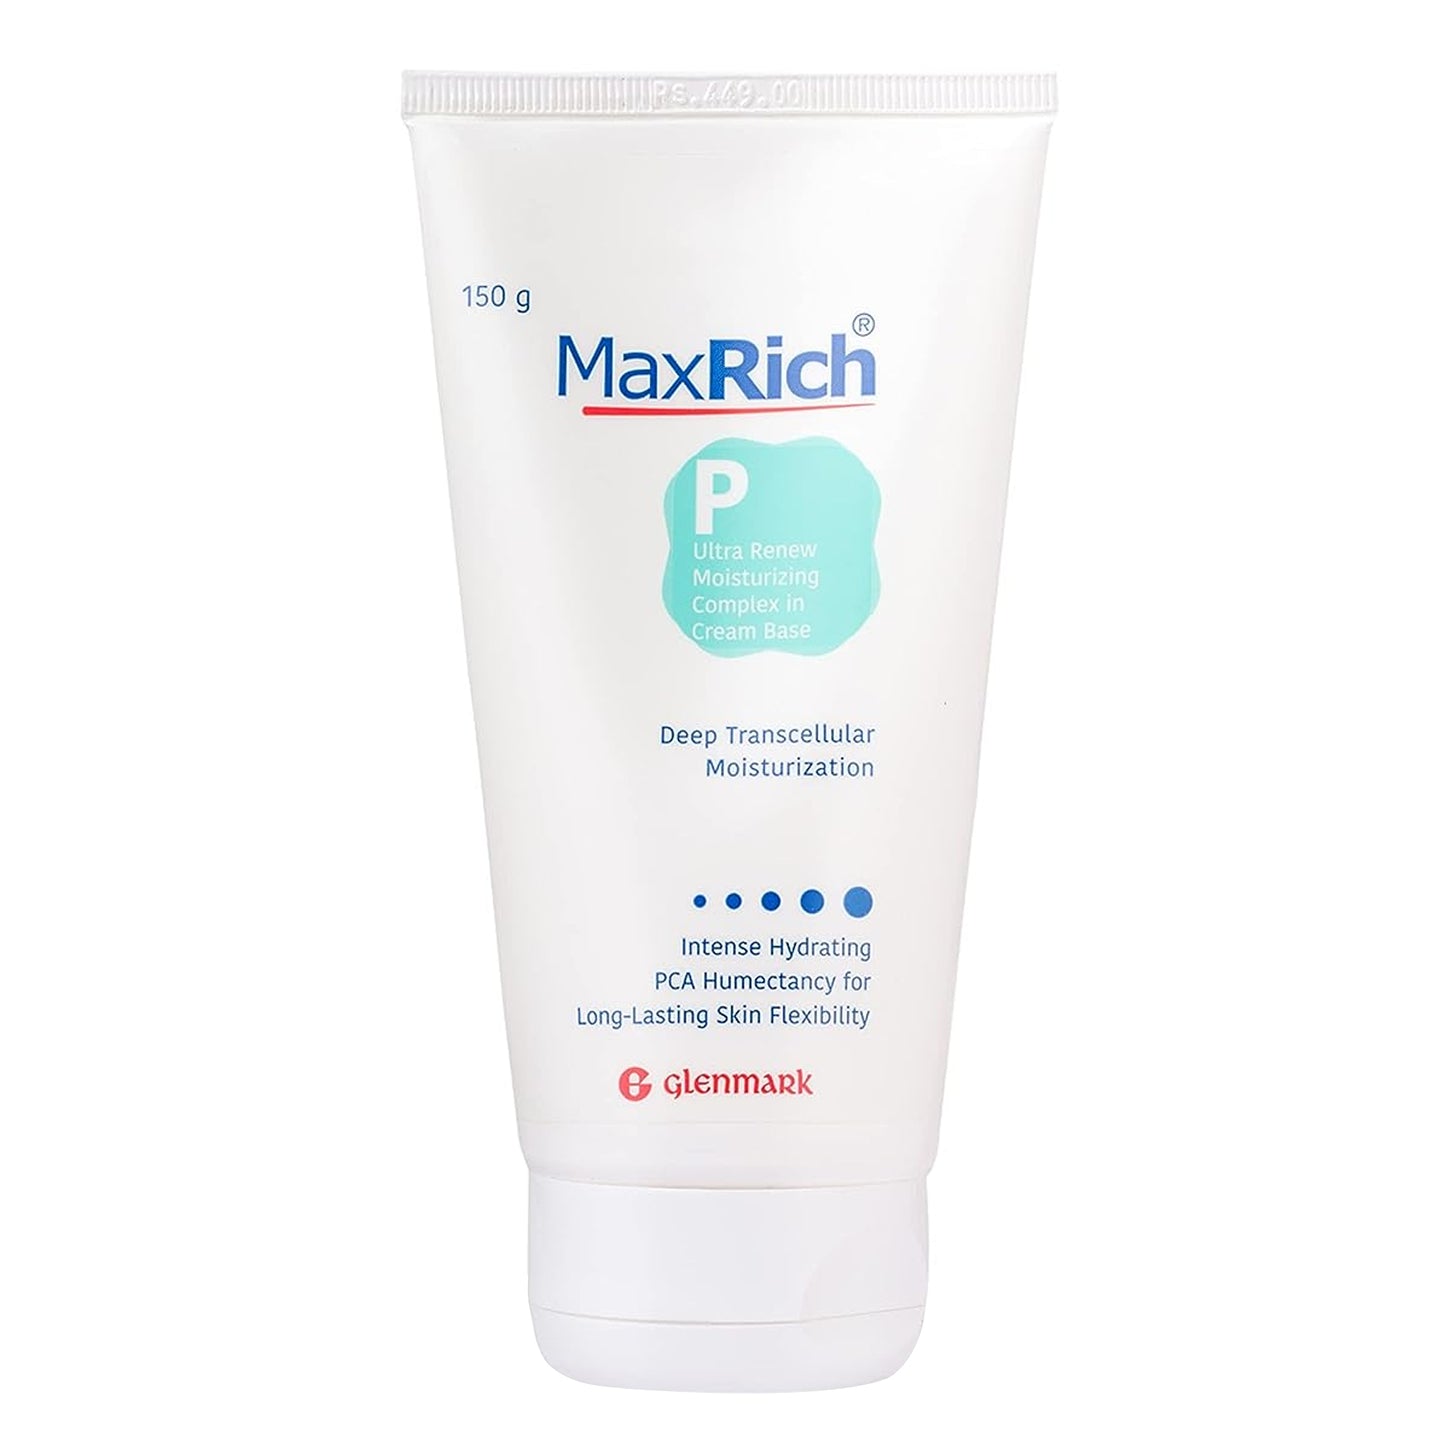 MaxRich P Ultra Renew Moisturizing Cream, 150gm